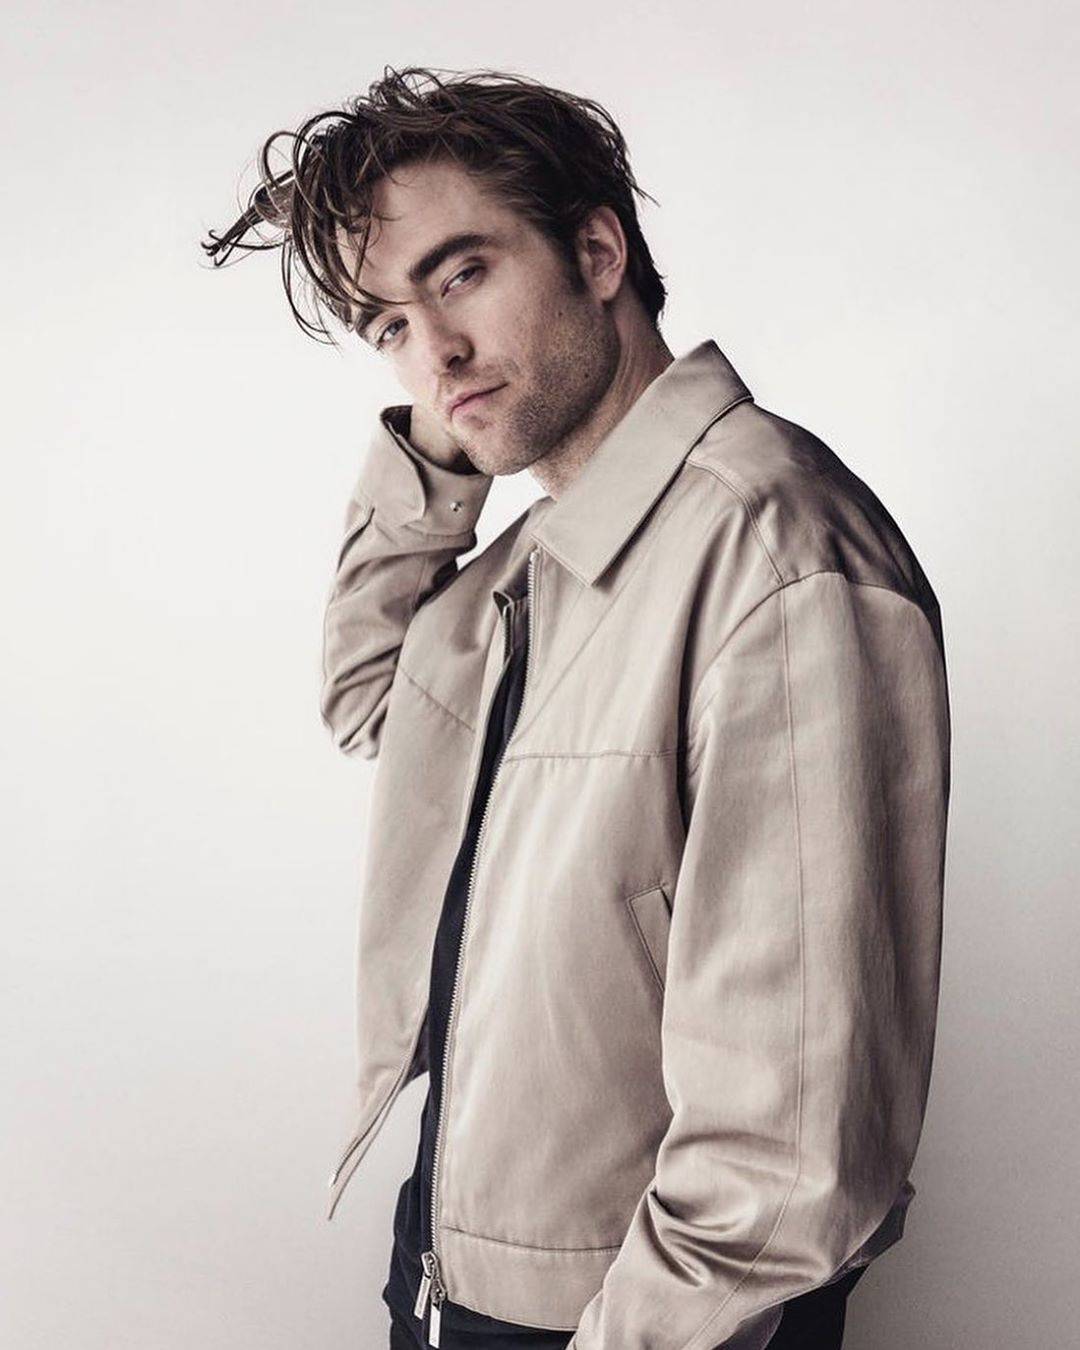 'The Batman' production halts as lead actor Robert Pattinson tests positive for Covid-19